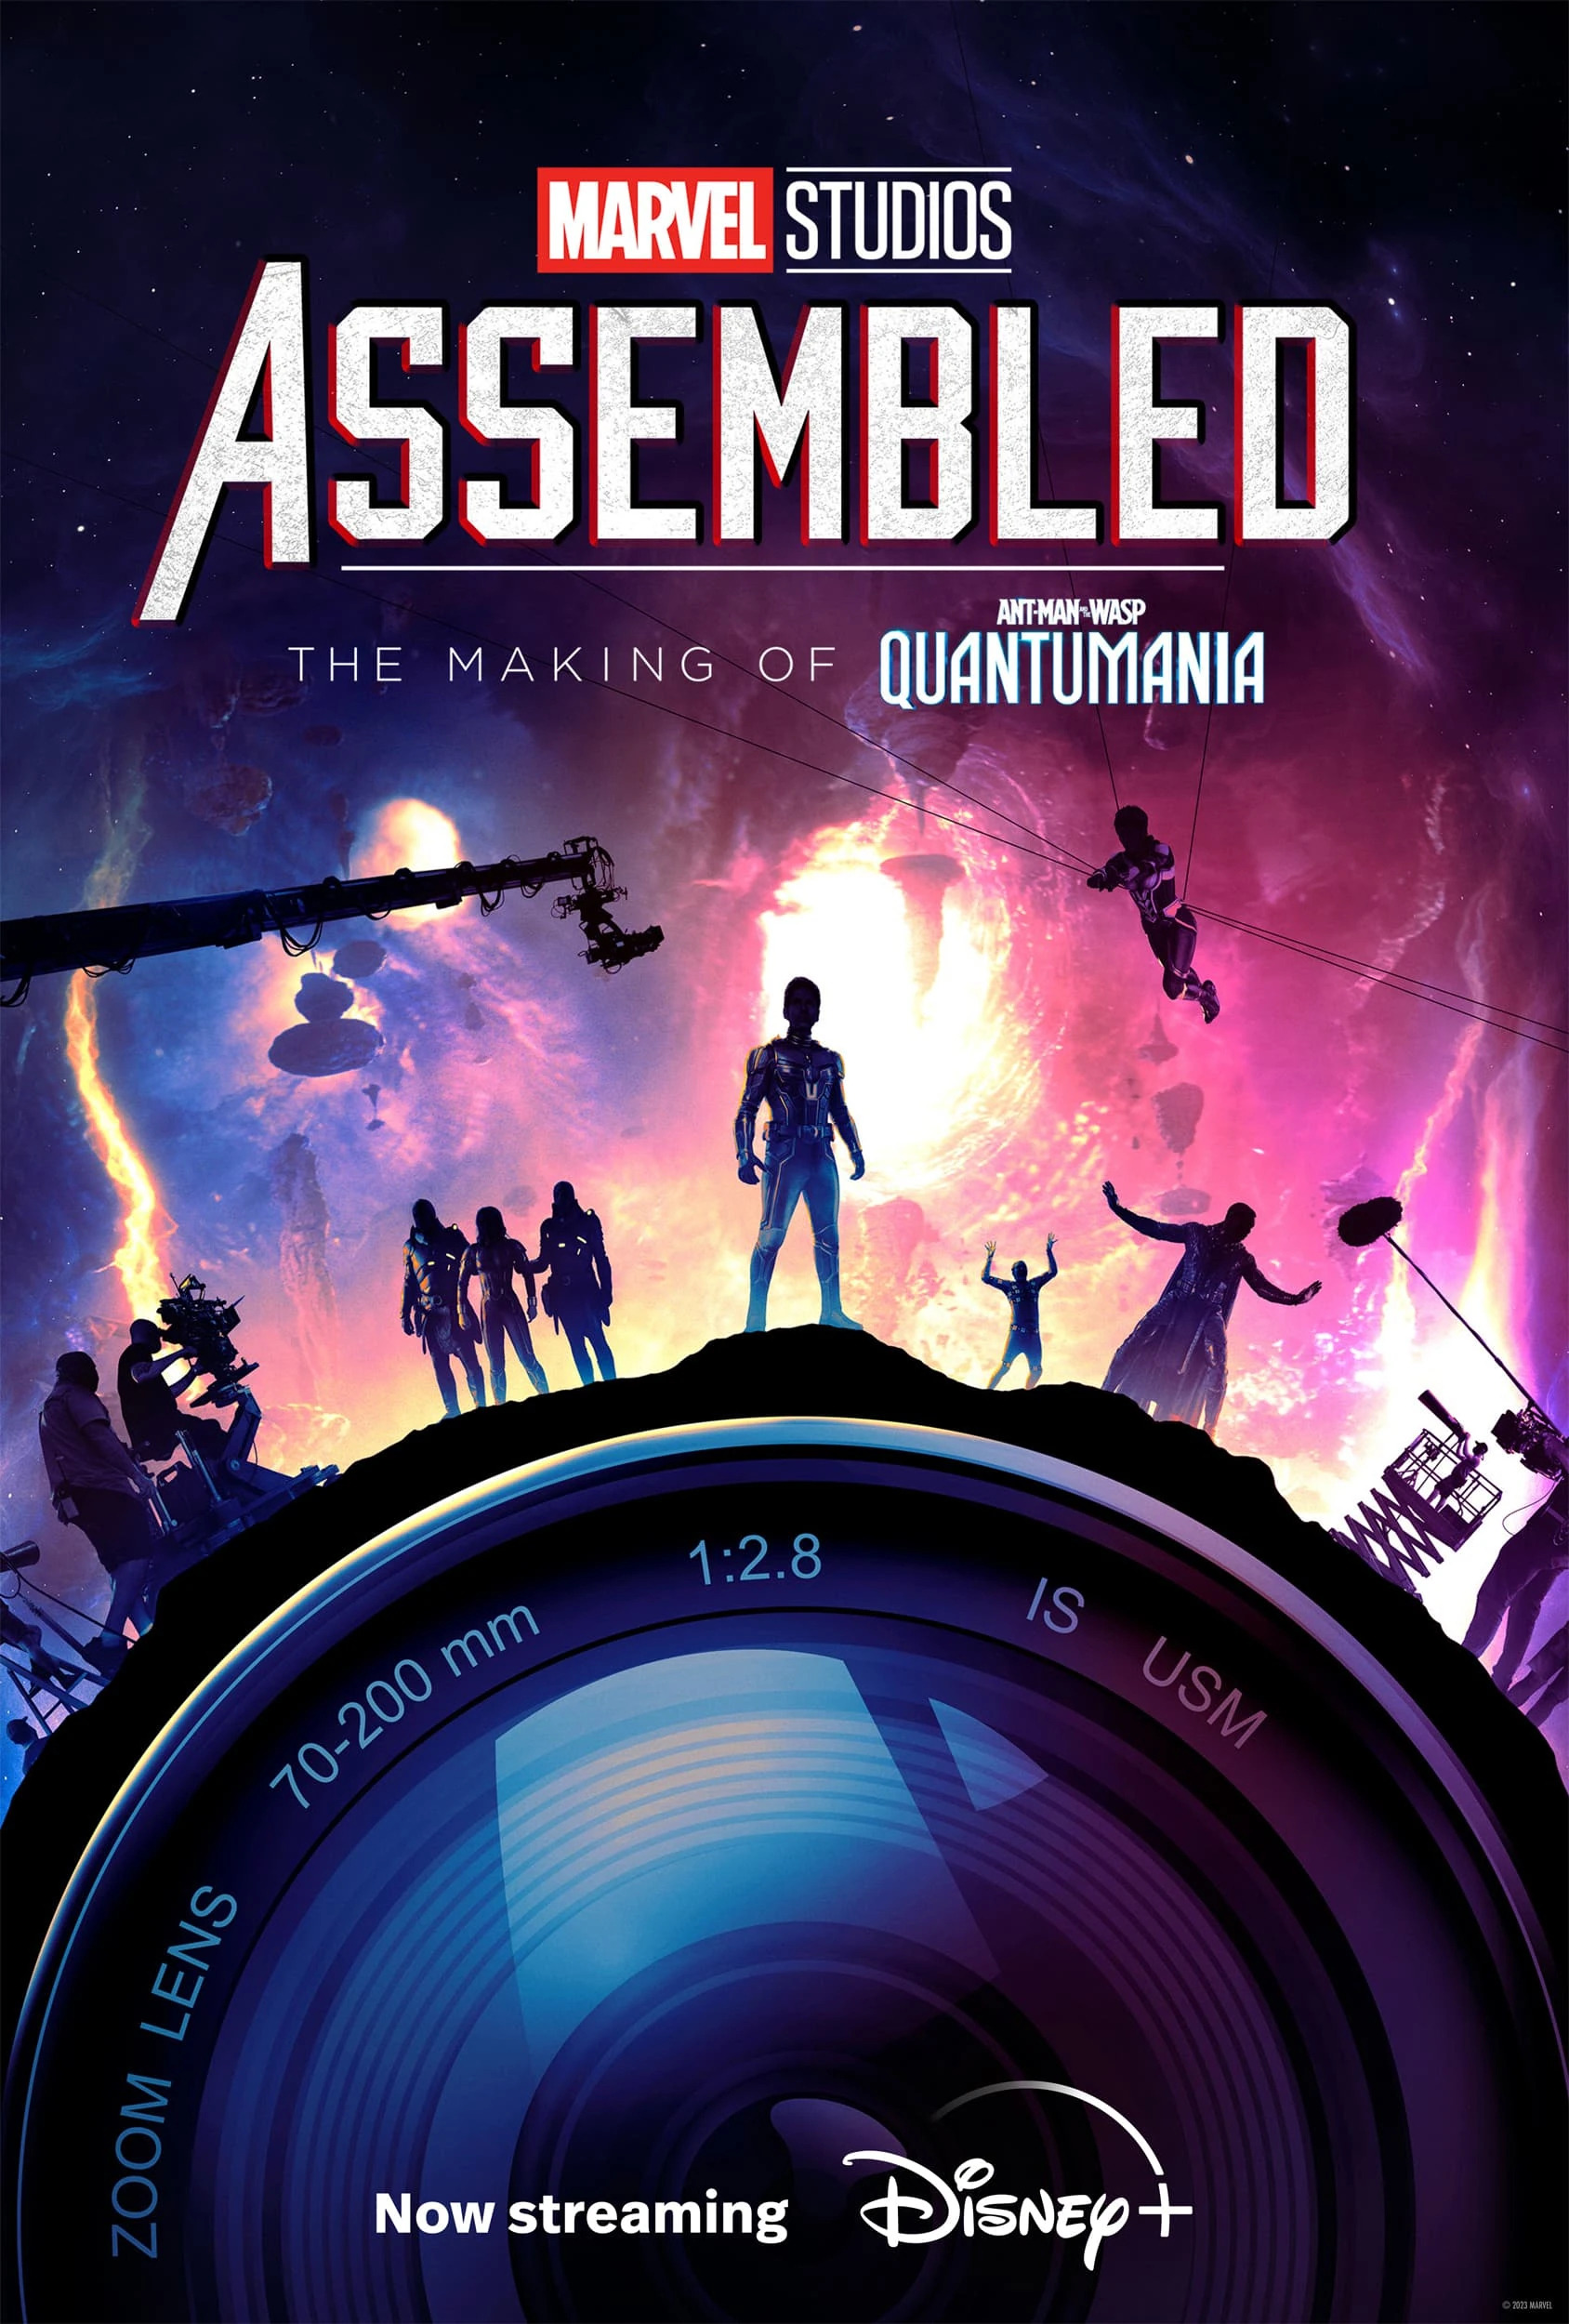 Mega Sized TV Poster Image for Marvel Studios: Assembled (#15 of 20)